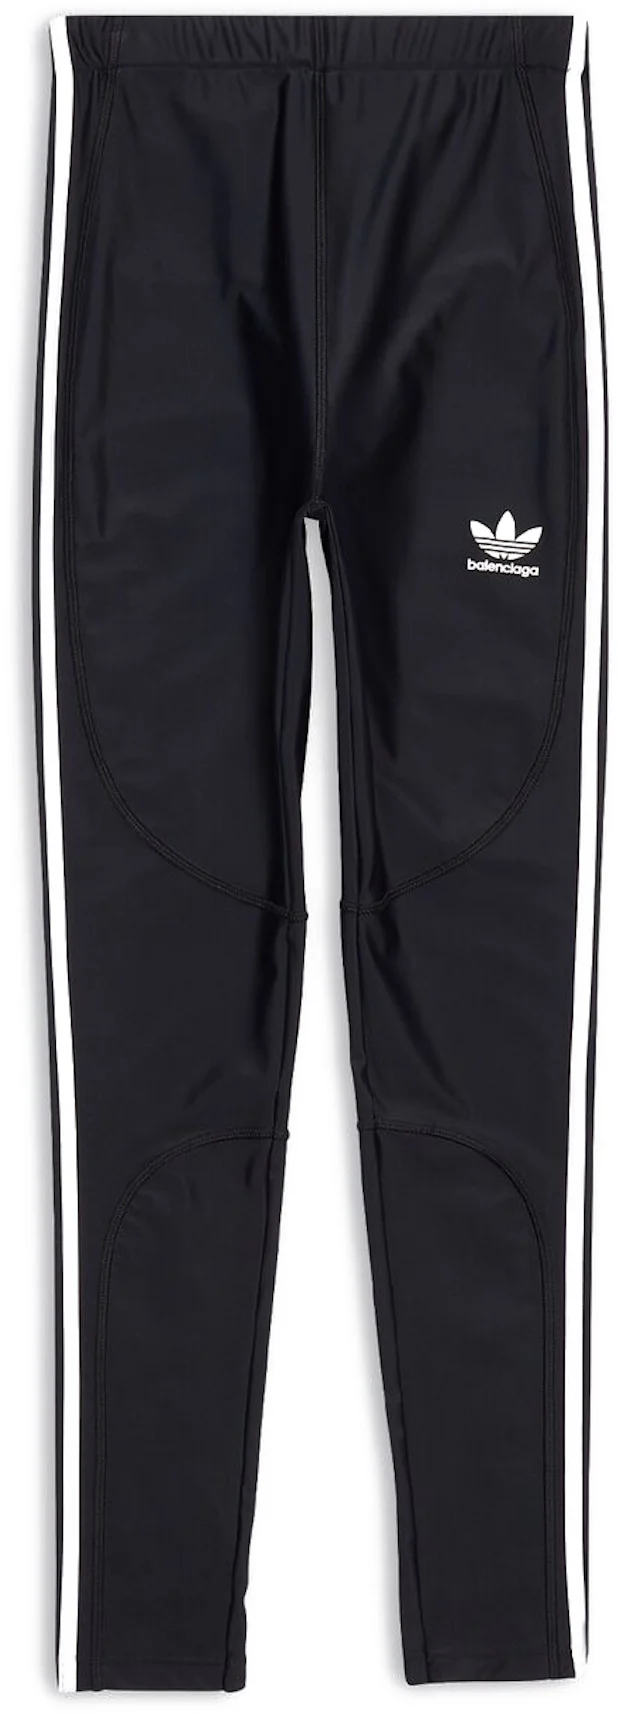 Balenciaga Black Adidas Edition Leggings - 1000 Black